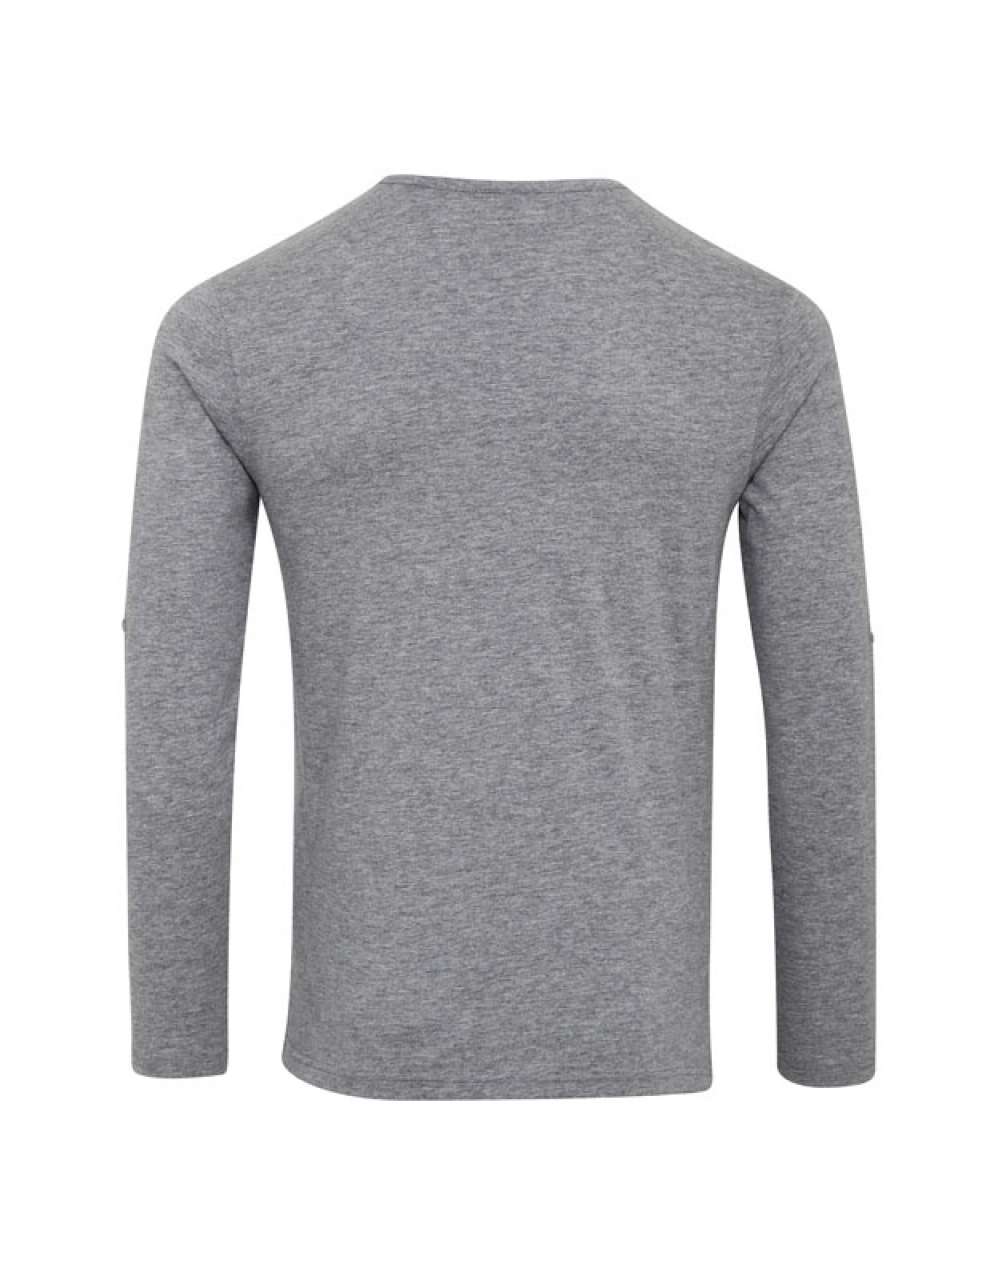 Premier Herren Longshirt T-Shirt Oversize Longsleeve Sweatshirt